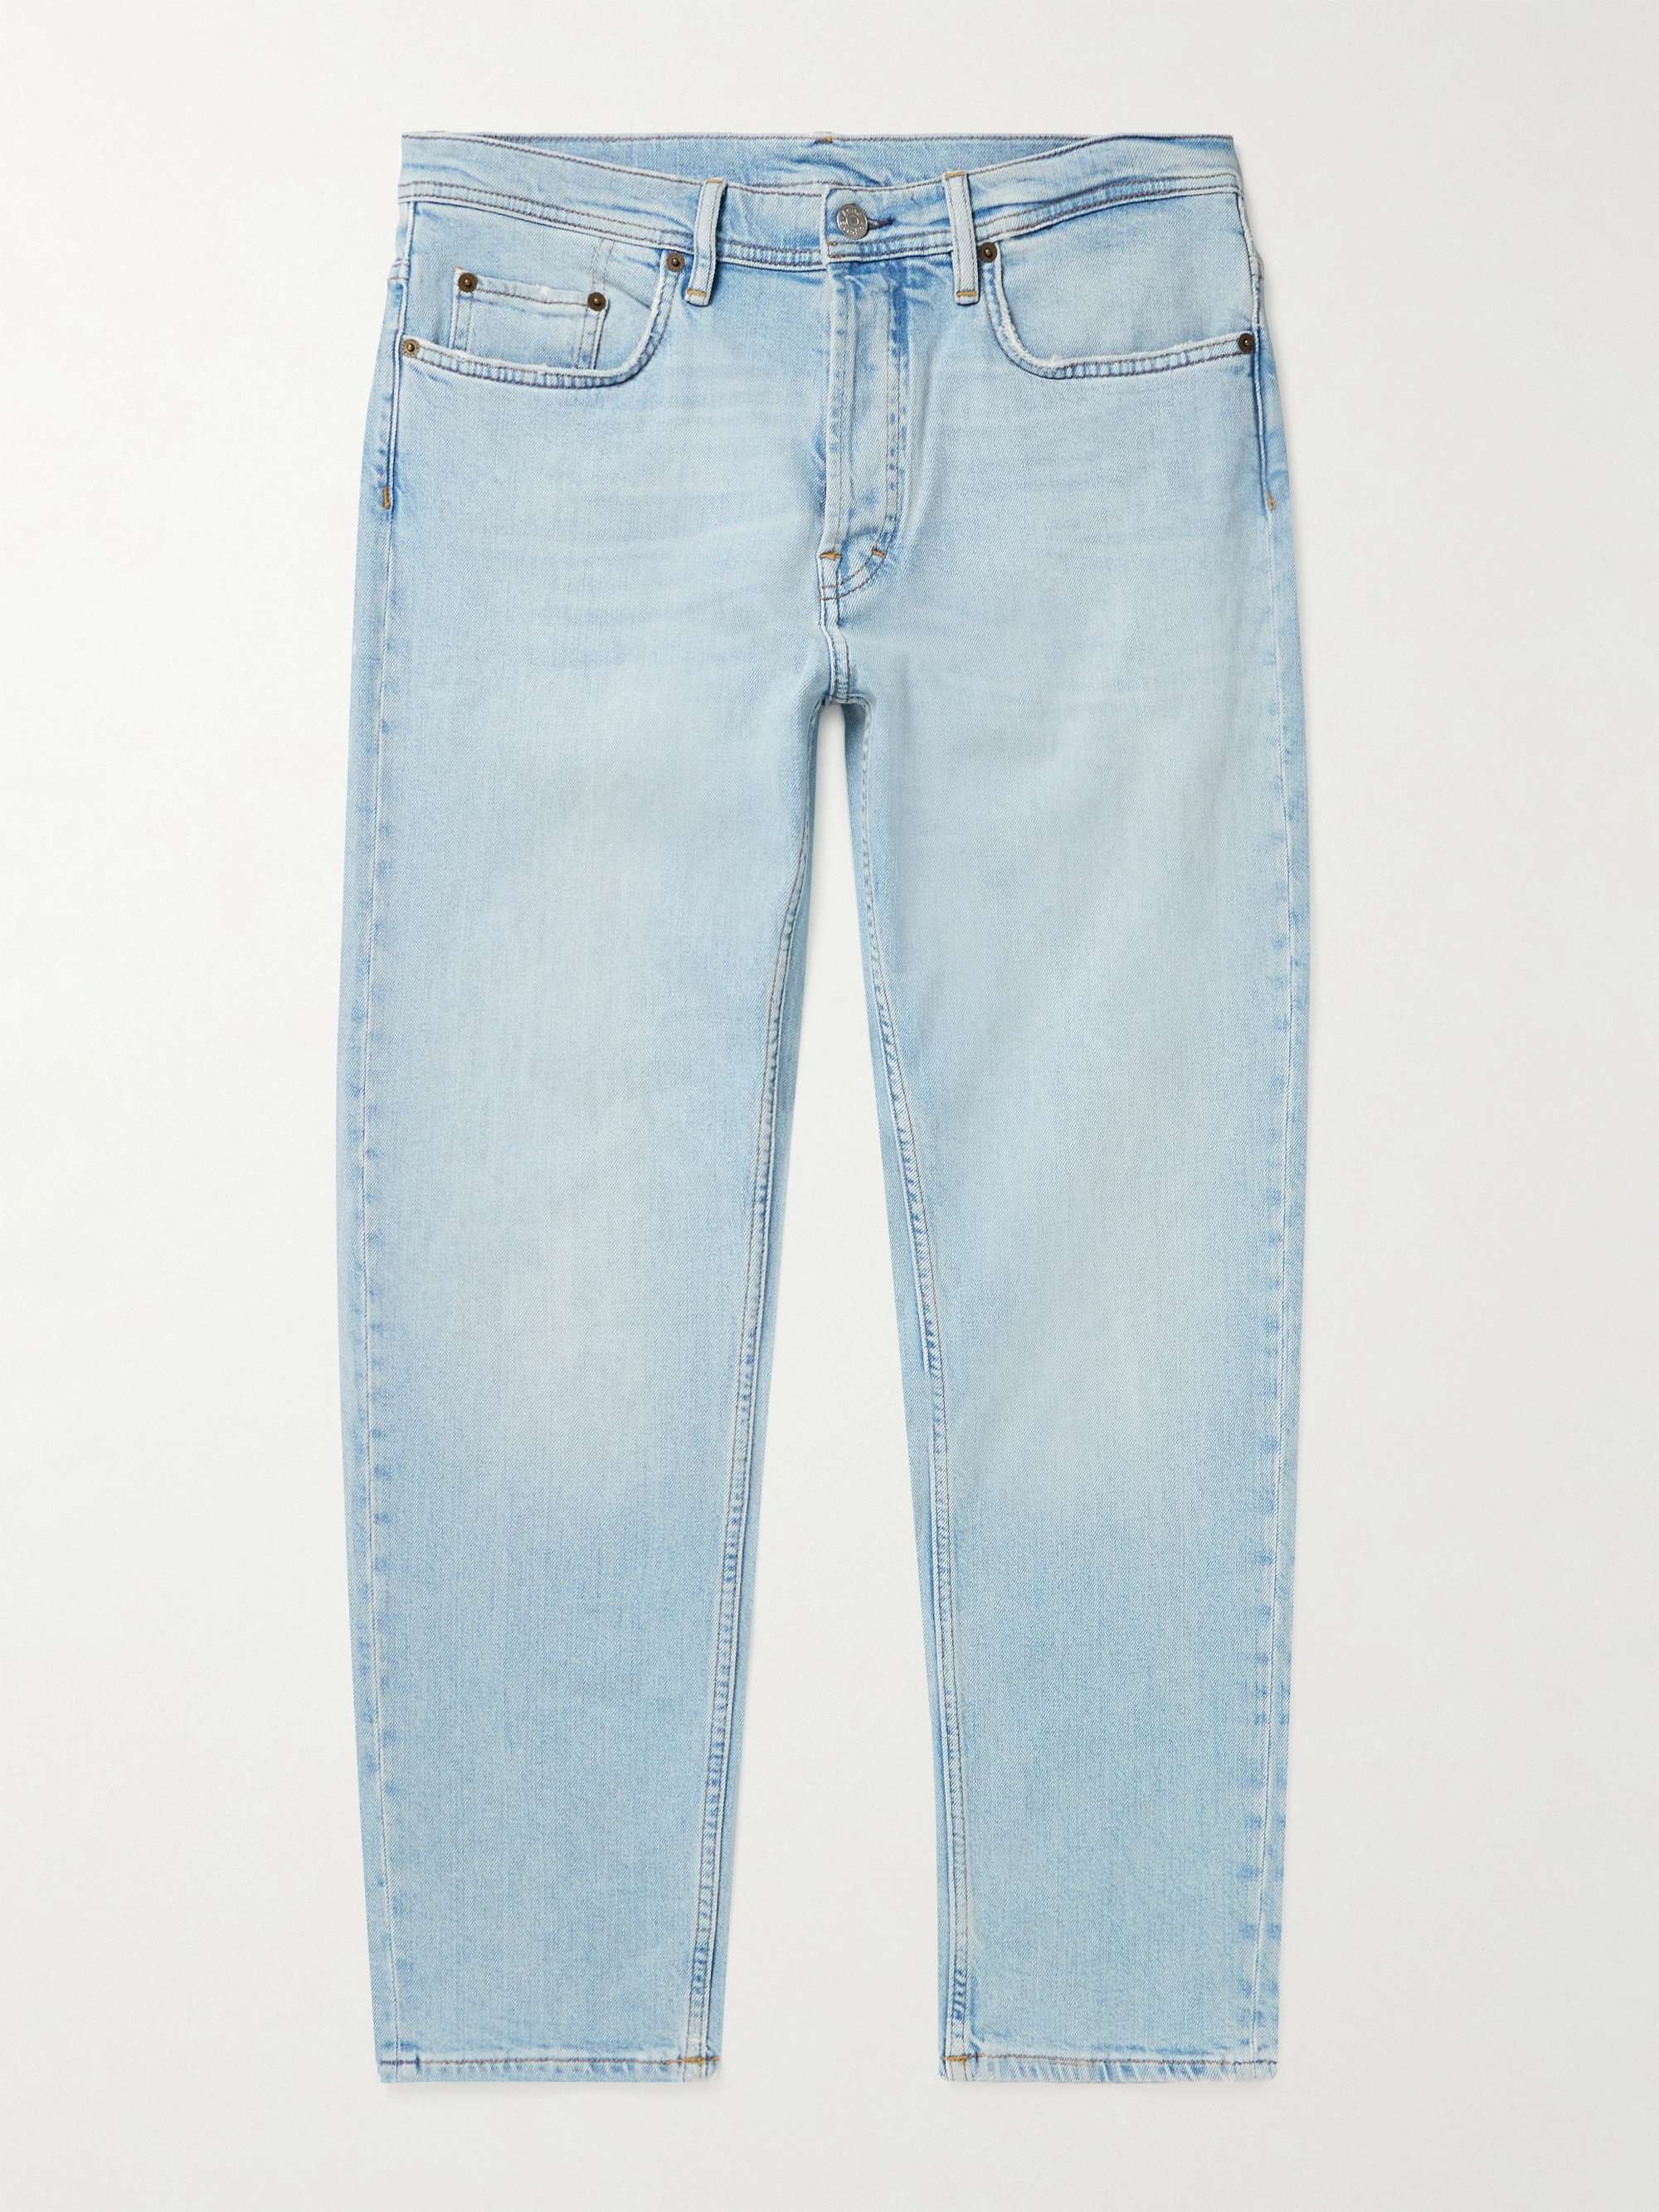 ACNE STUDIOS River Slim-Fit Stretch-Denim Jeans for Men | MR PORTER